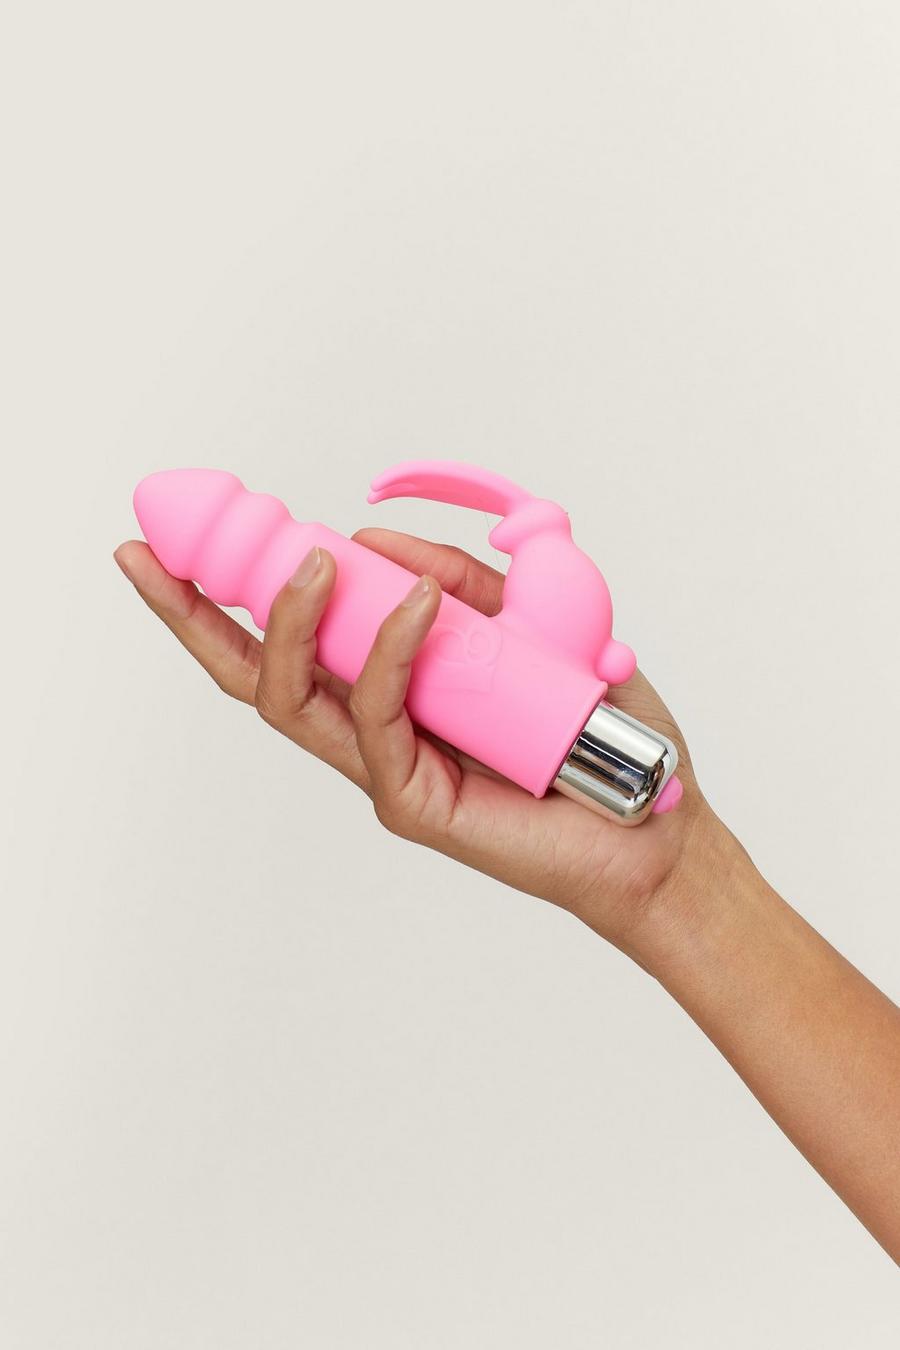 10 Speed Mini Rabbit Bullet Vibrator Sex Toy